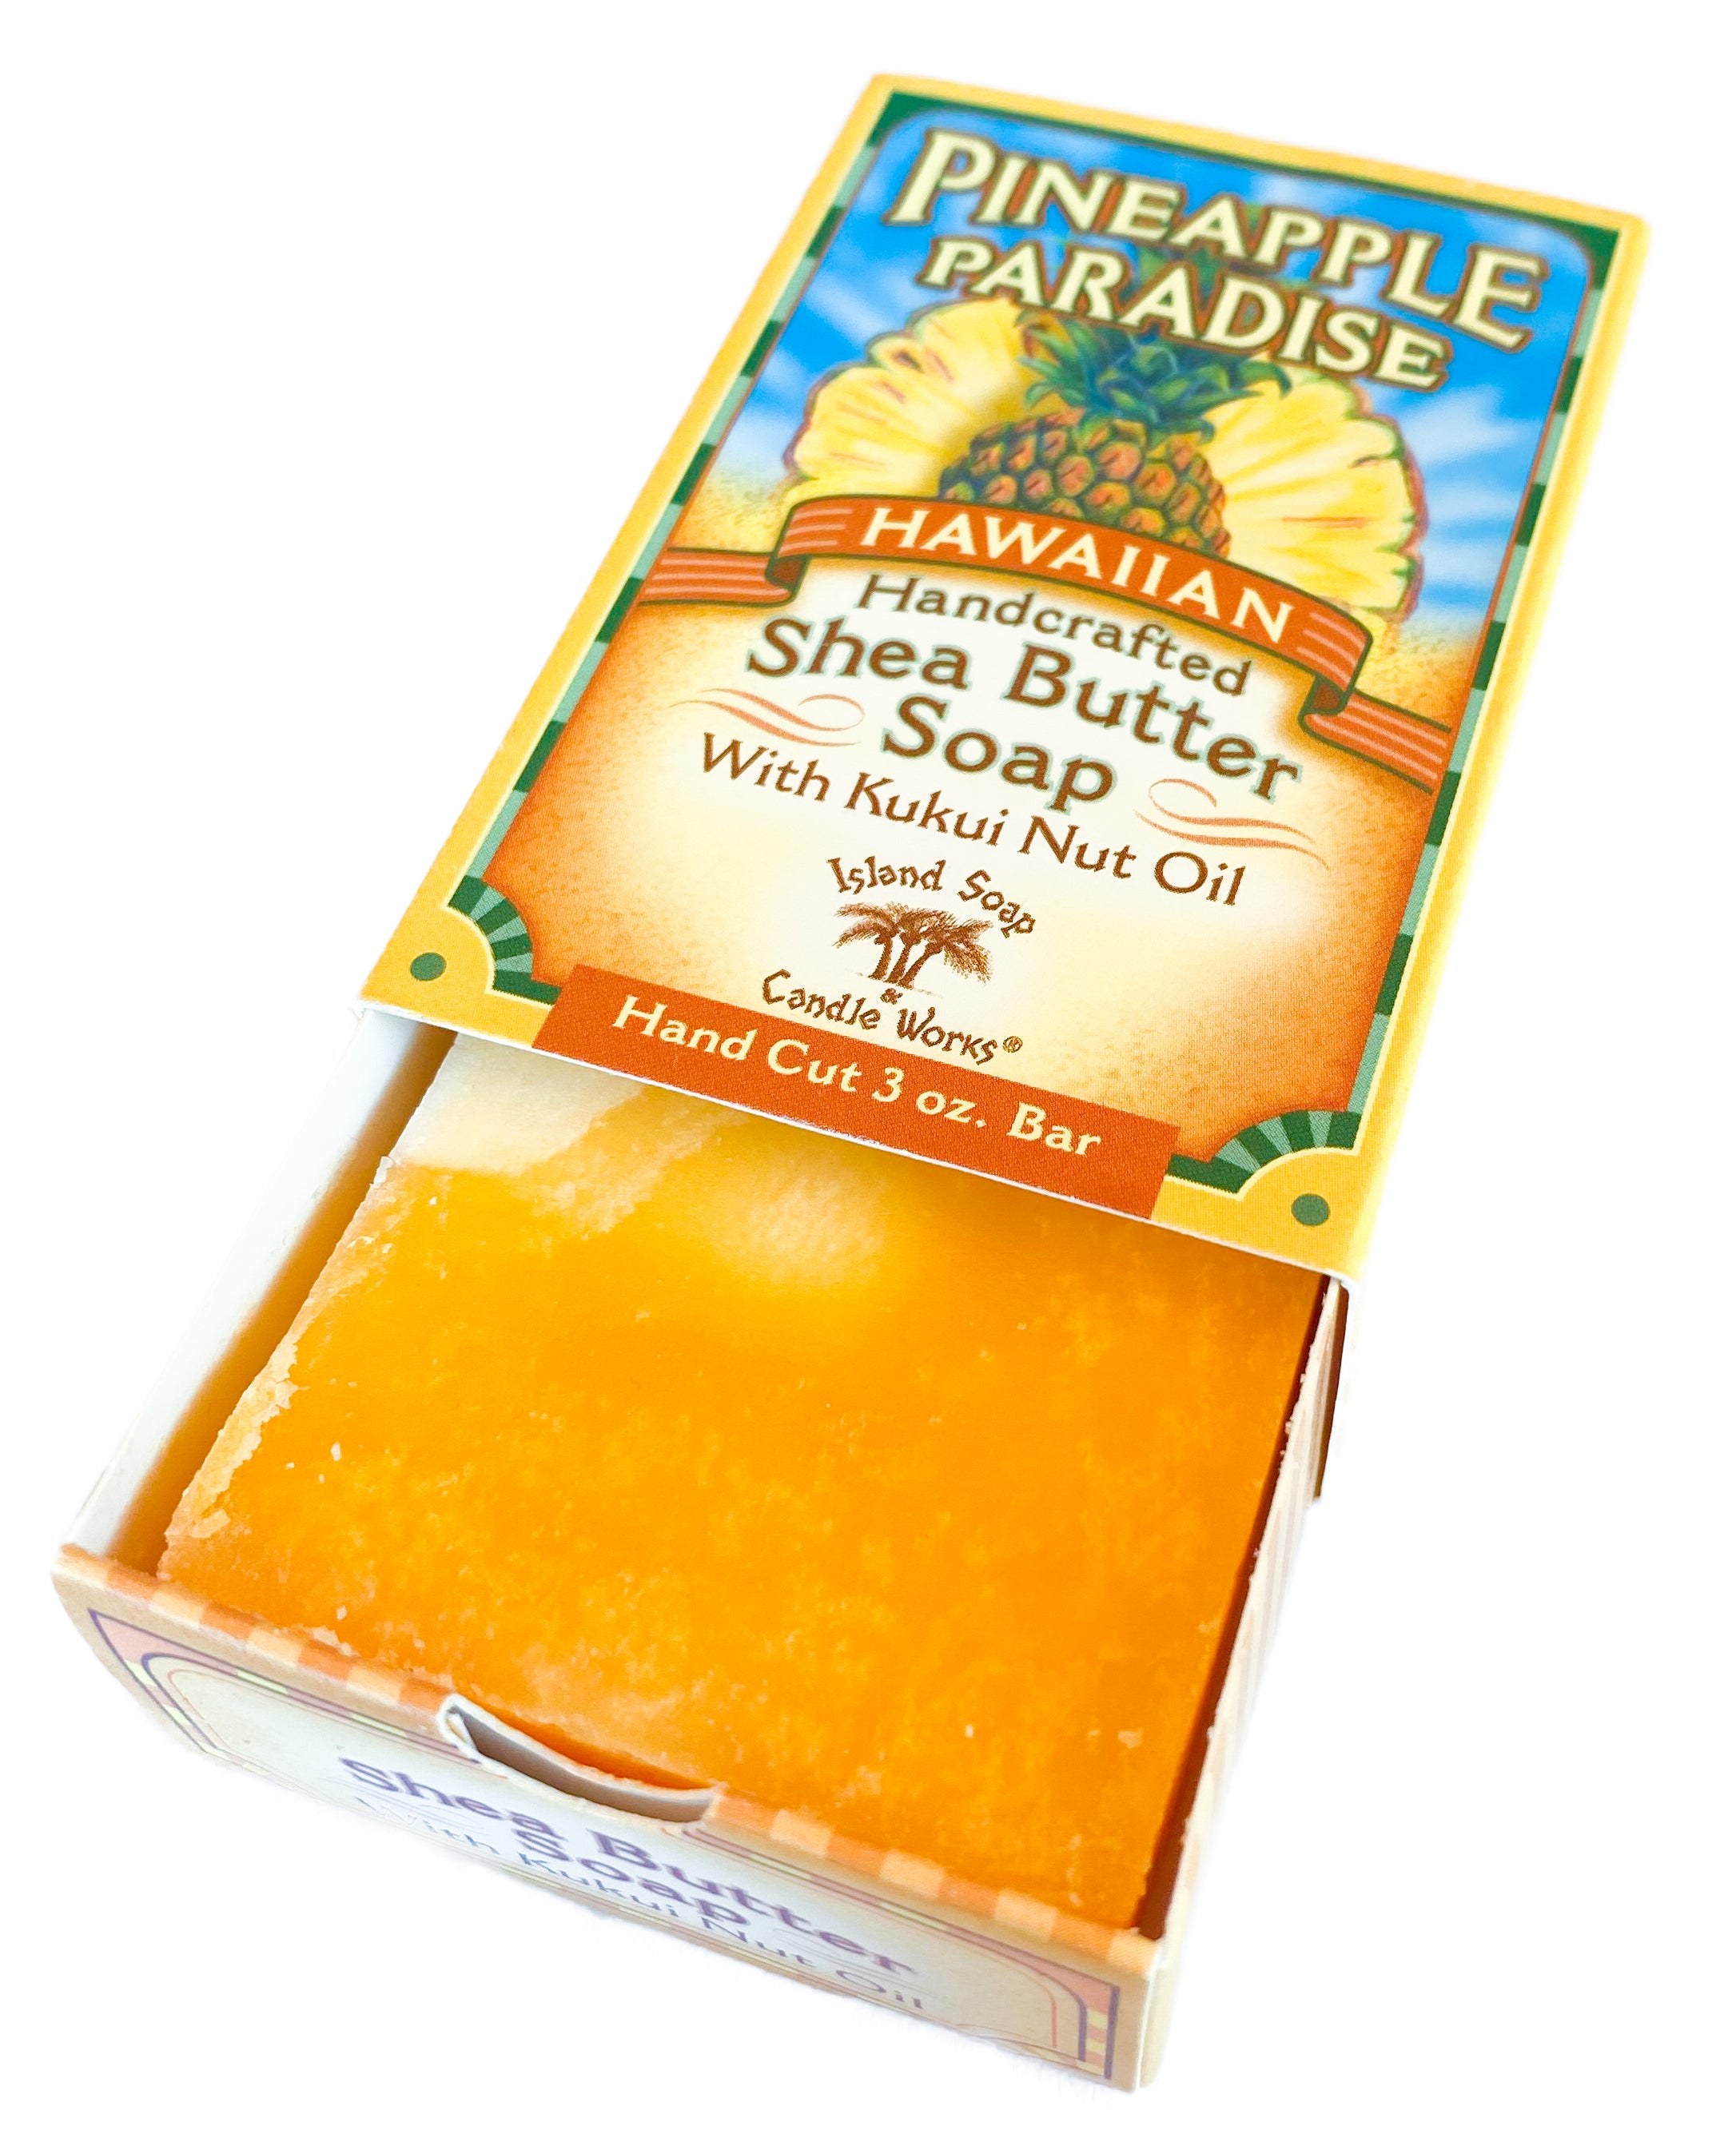 Pineapple Paradise Hydrating 3 oz. Shea Butter Soap – Island Soap